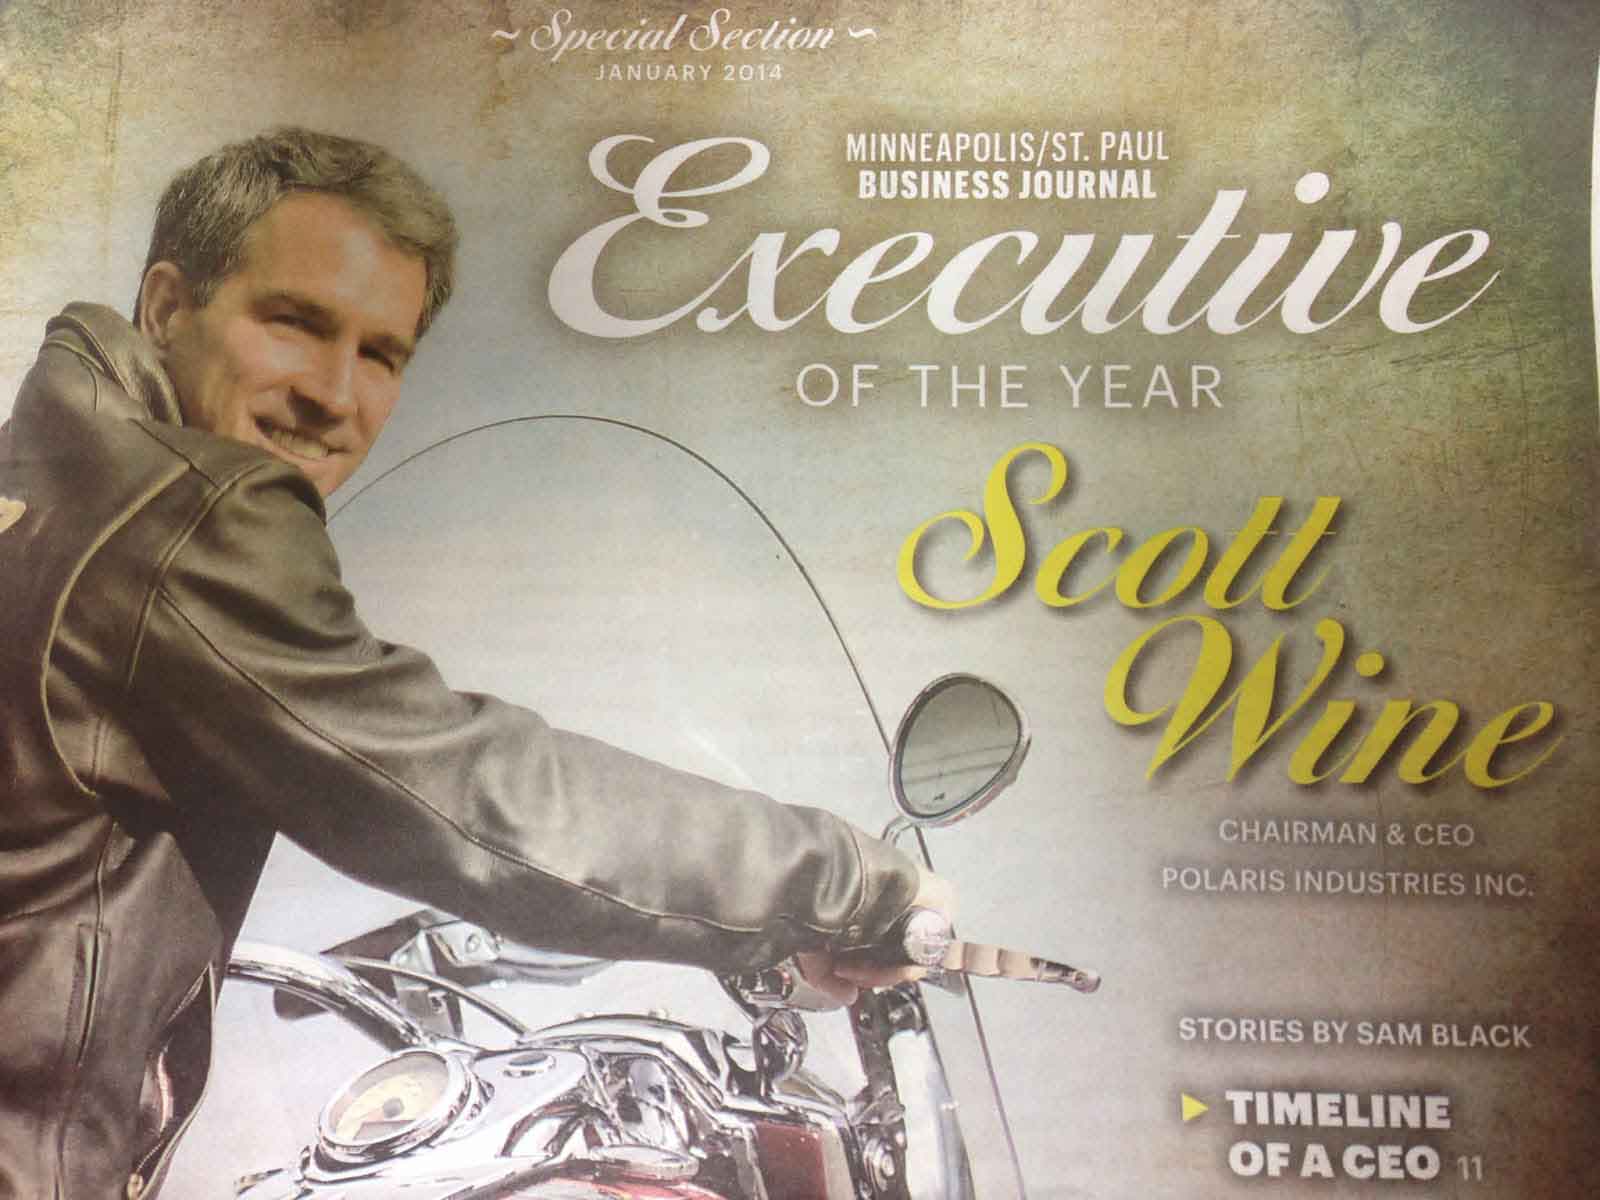 Executive of The Year Scott Wine